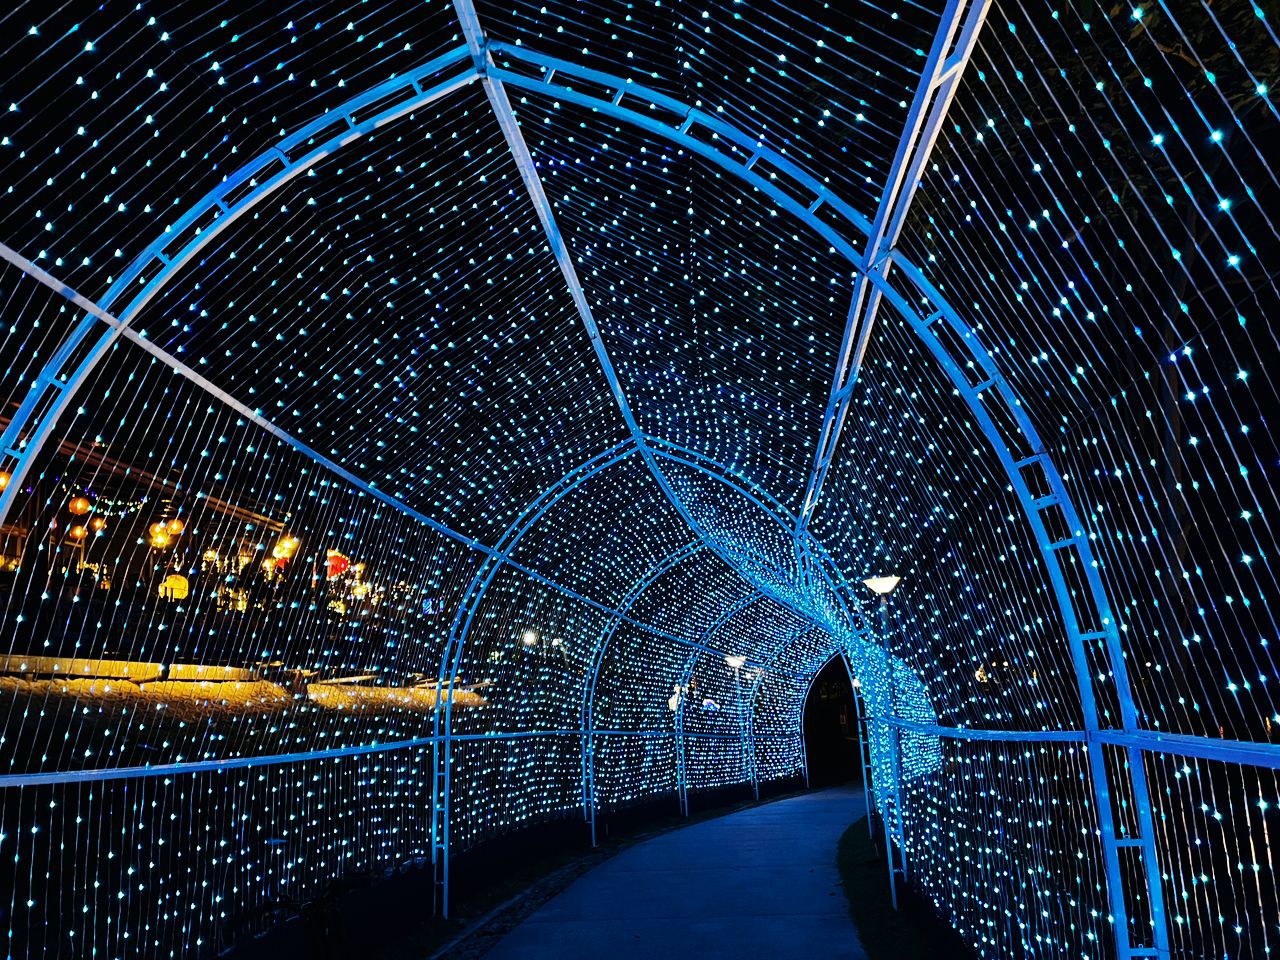 starry lights tunnel - Desa ParkCity’s year-end lights festival